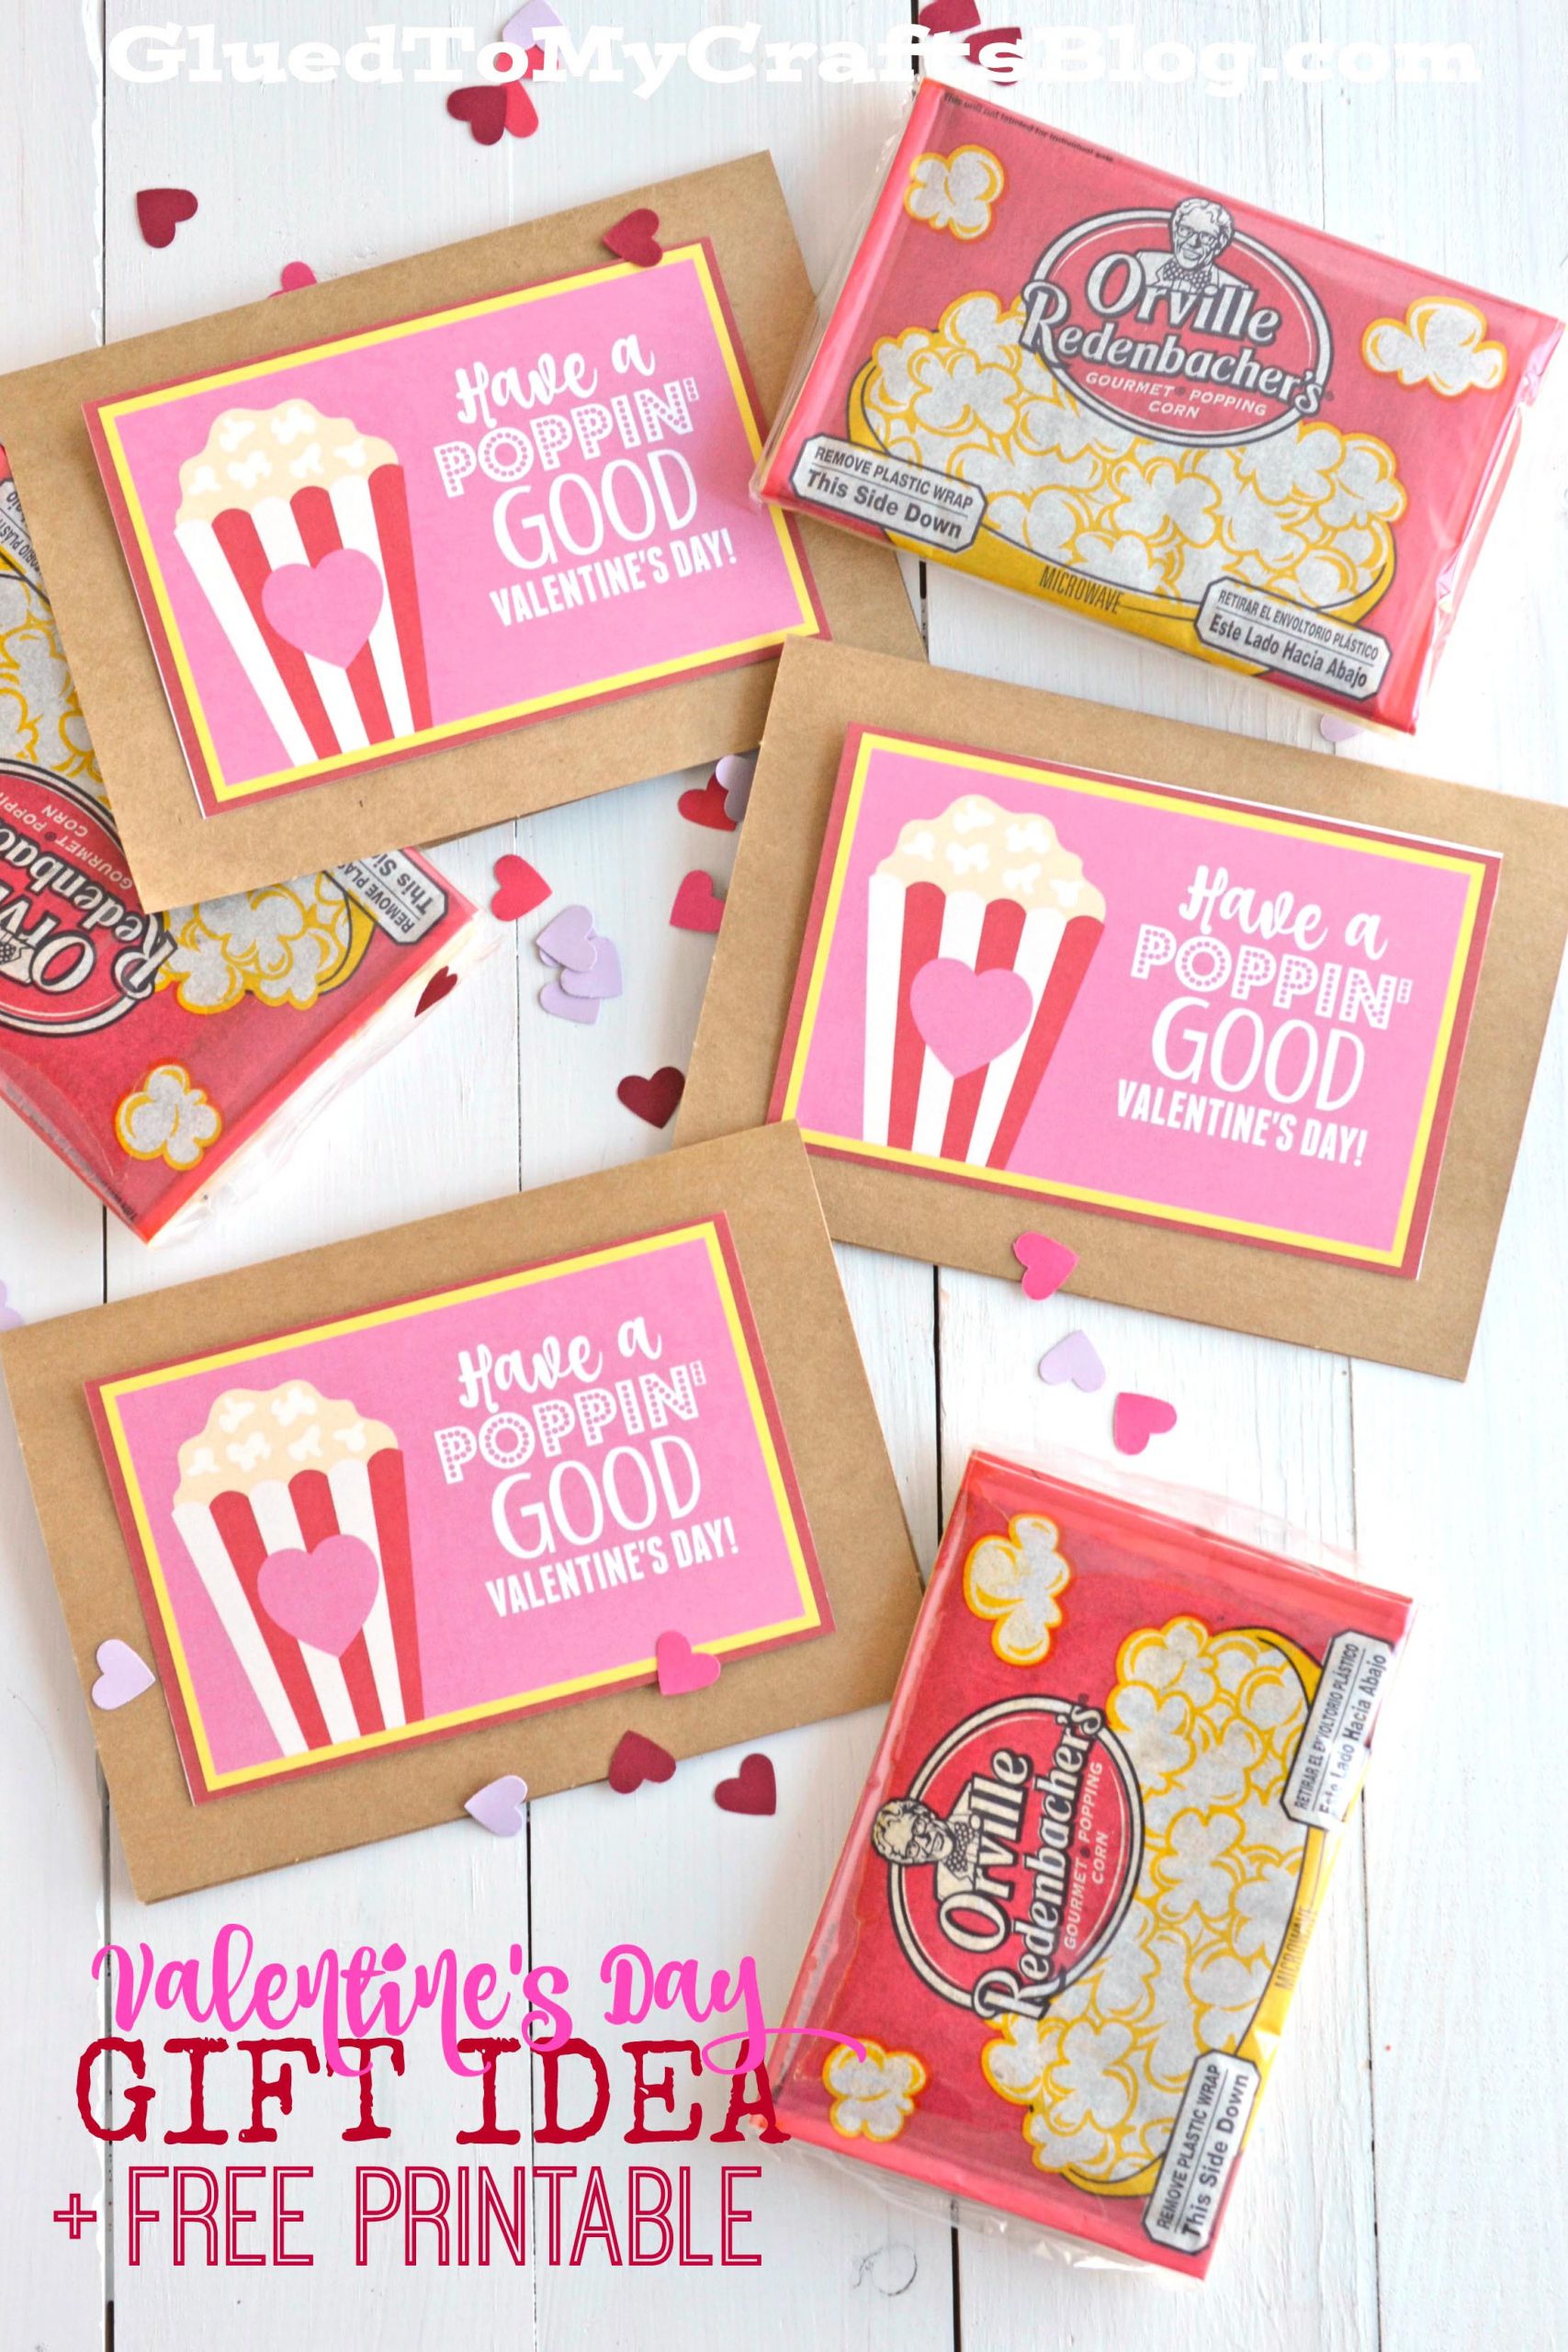 Good Valentine Day Gift Ideas
 Poppin Good Valentine s Day Gift Idea w free printable